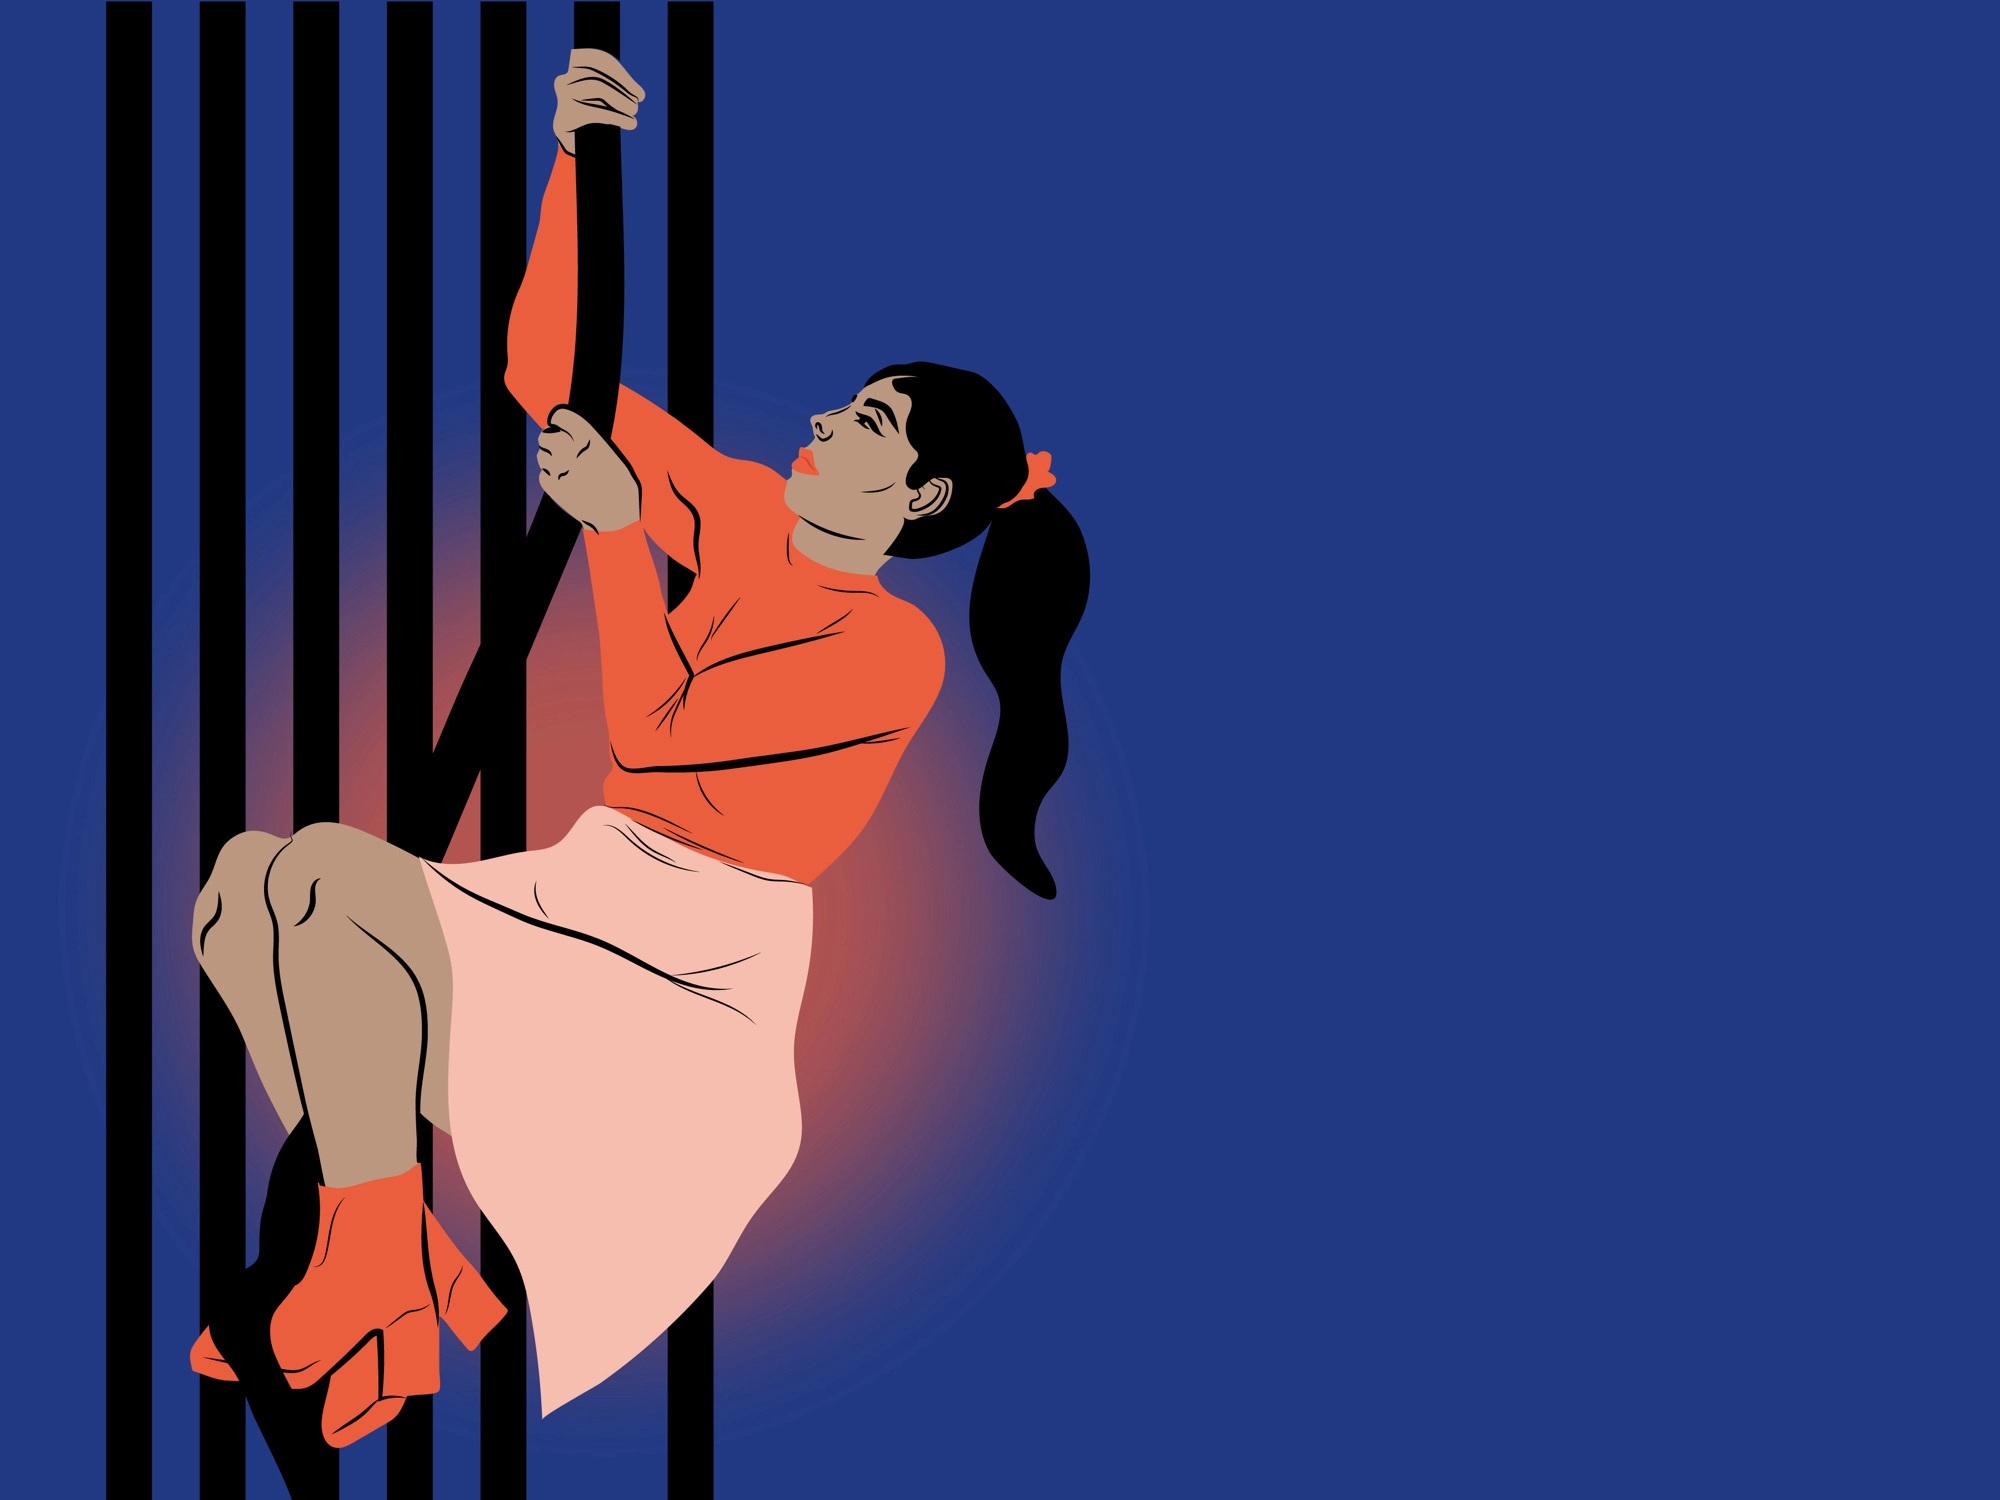 Illustration of a woman climbing bars